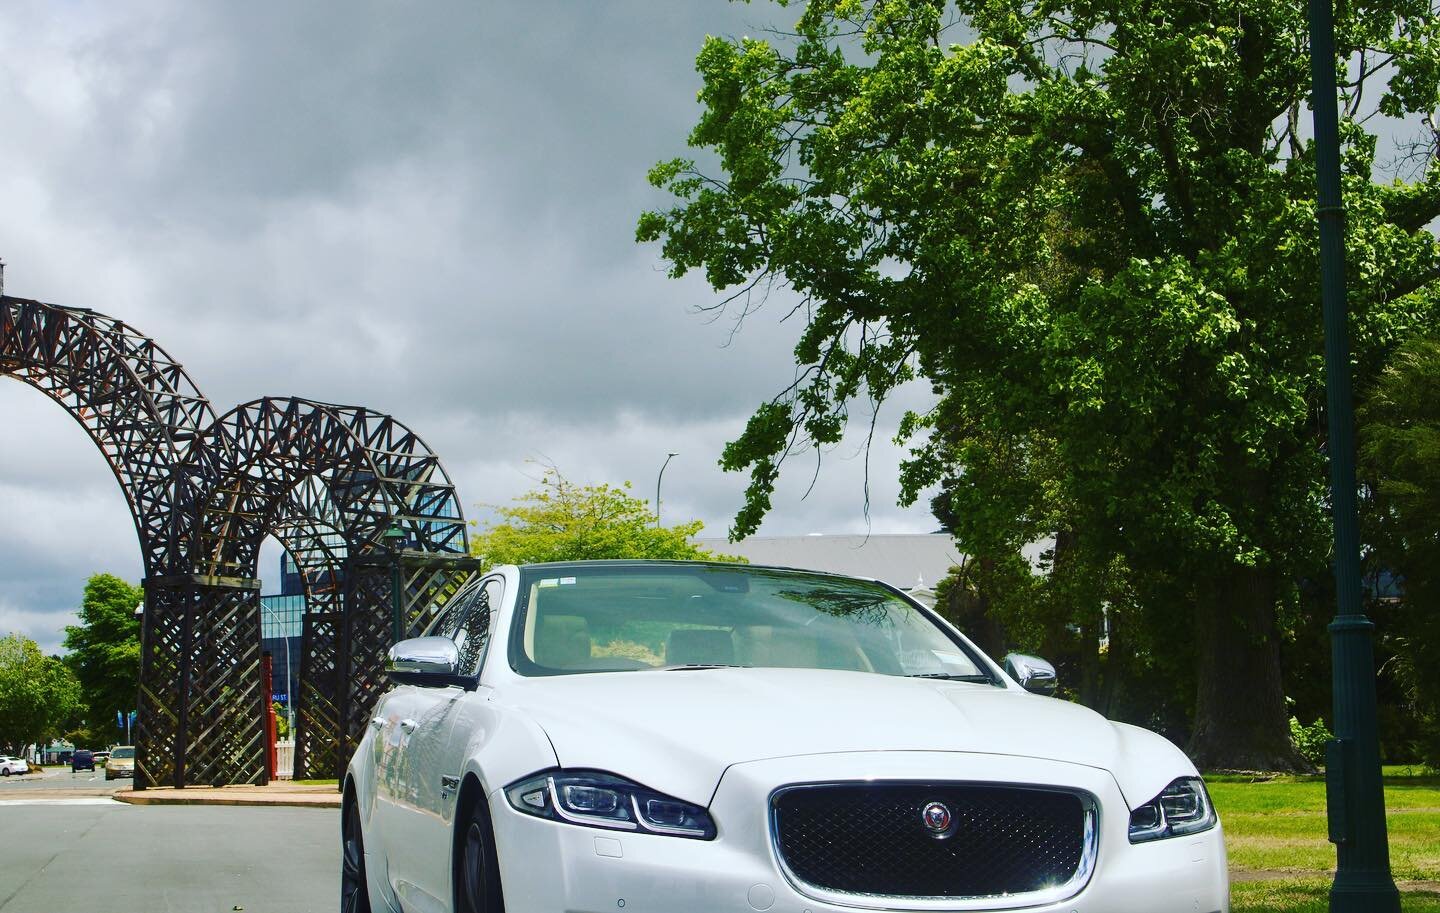 Opening 🔜  Luxury Car Hire New Zealand😎 

Bookings Open Now !!

Wedding Cars | Airport &amp; Corporate Transfers | School Proms

#jaguarxjsupercharged #newzealandfinds #newzealandvacations #luxurylifestyle #jaguar